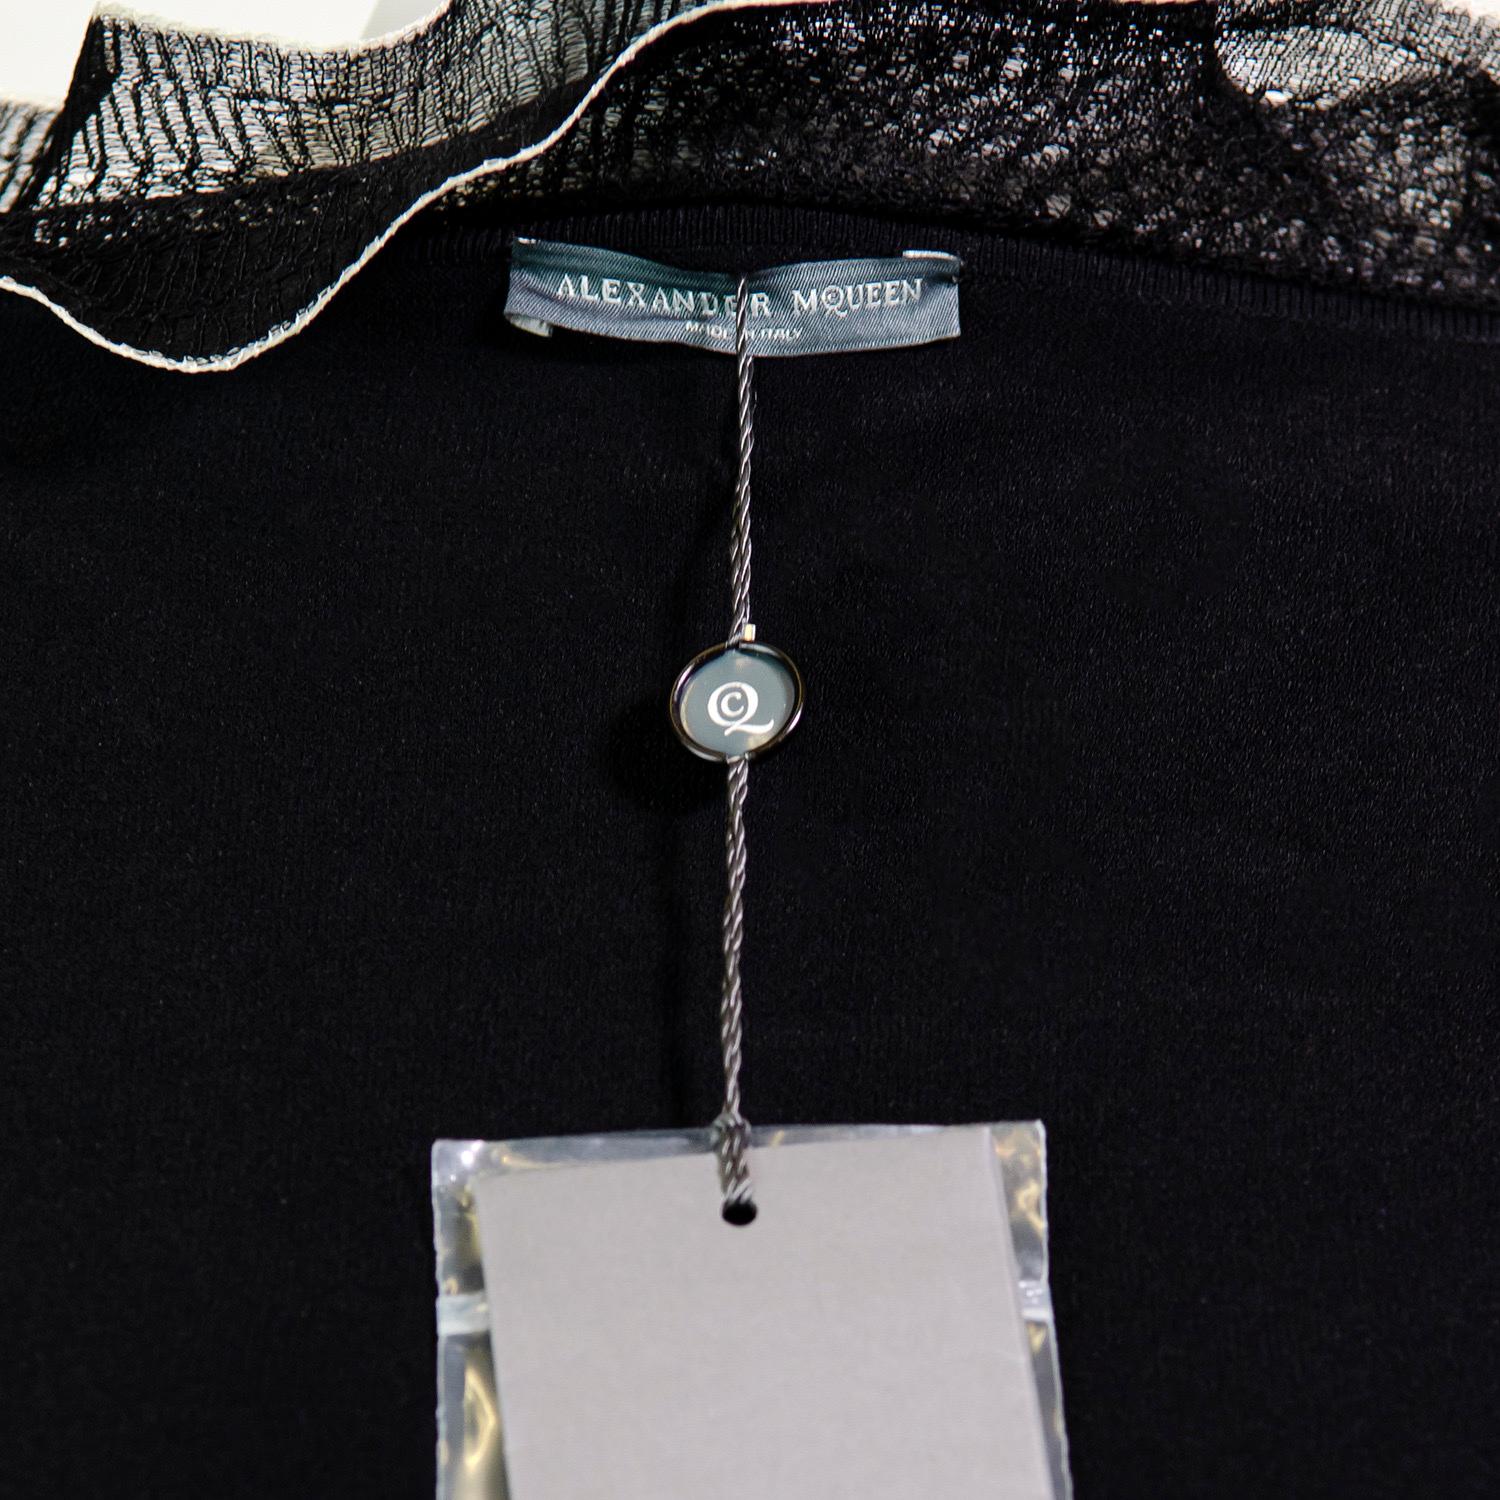 Alexander McQueen Silk / Viscose Ruffle Monochrome Dress - New With Tags  2